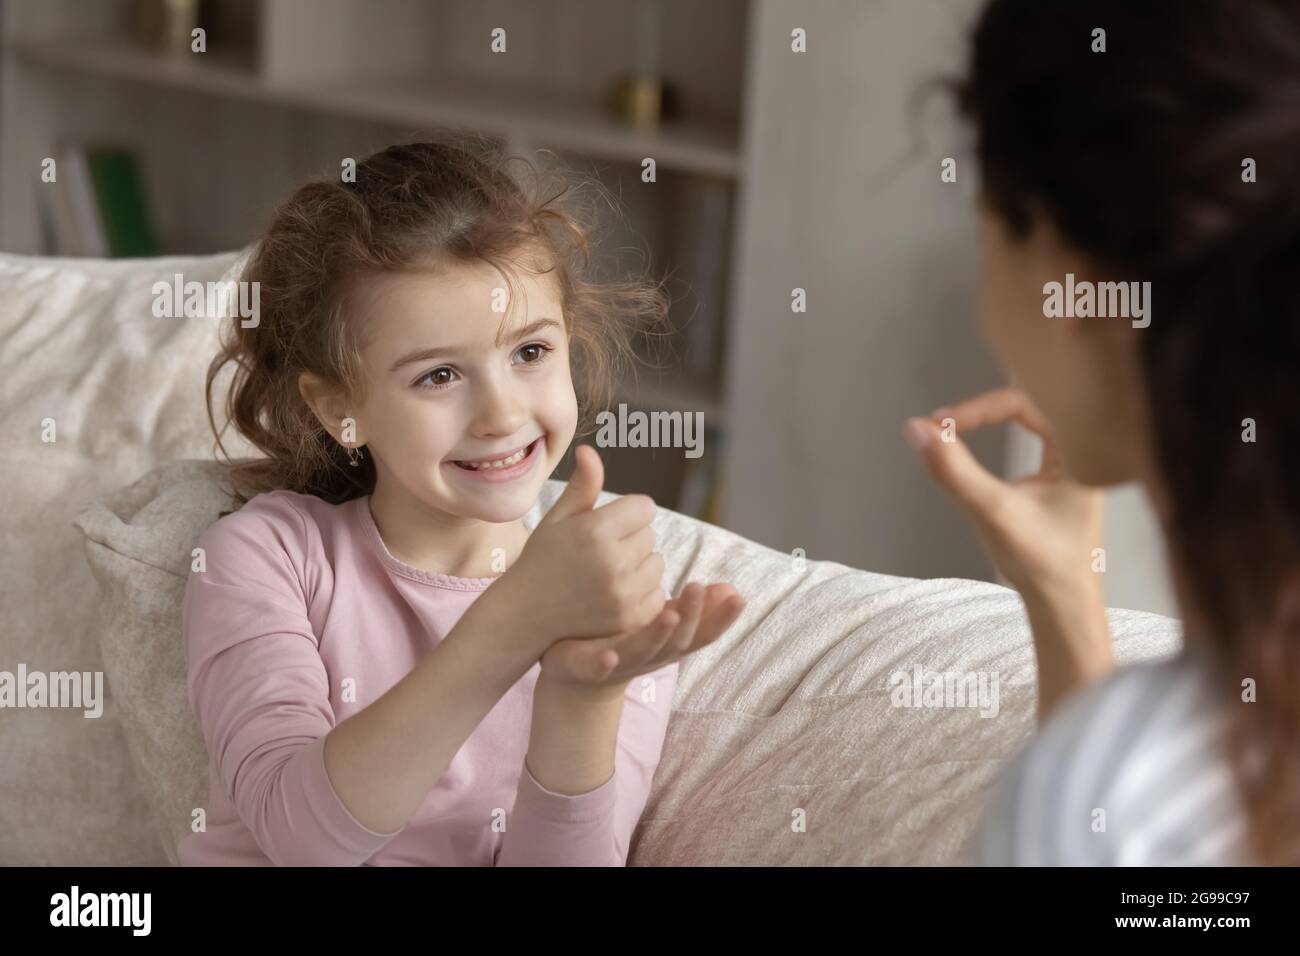 Smiling girl child talk using sign language Stock Photo